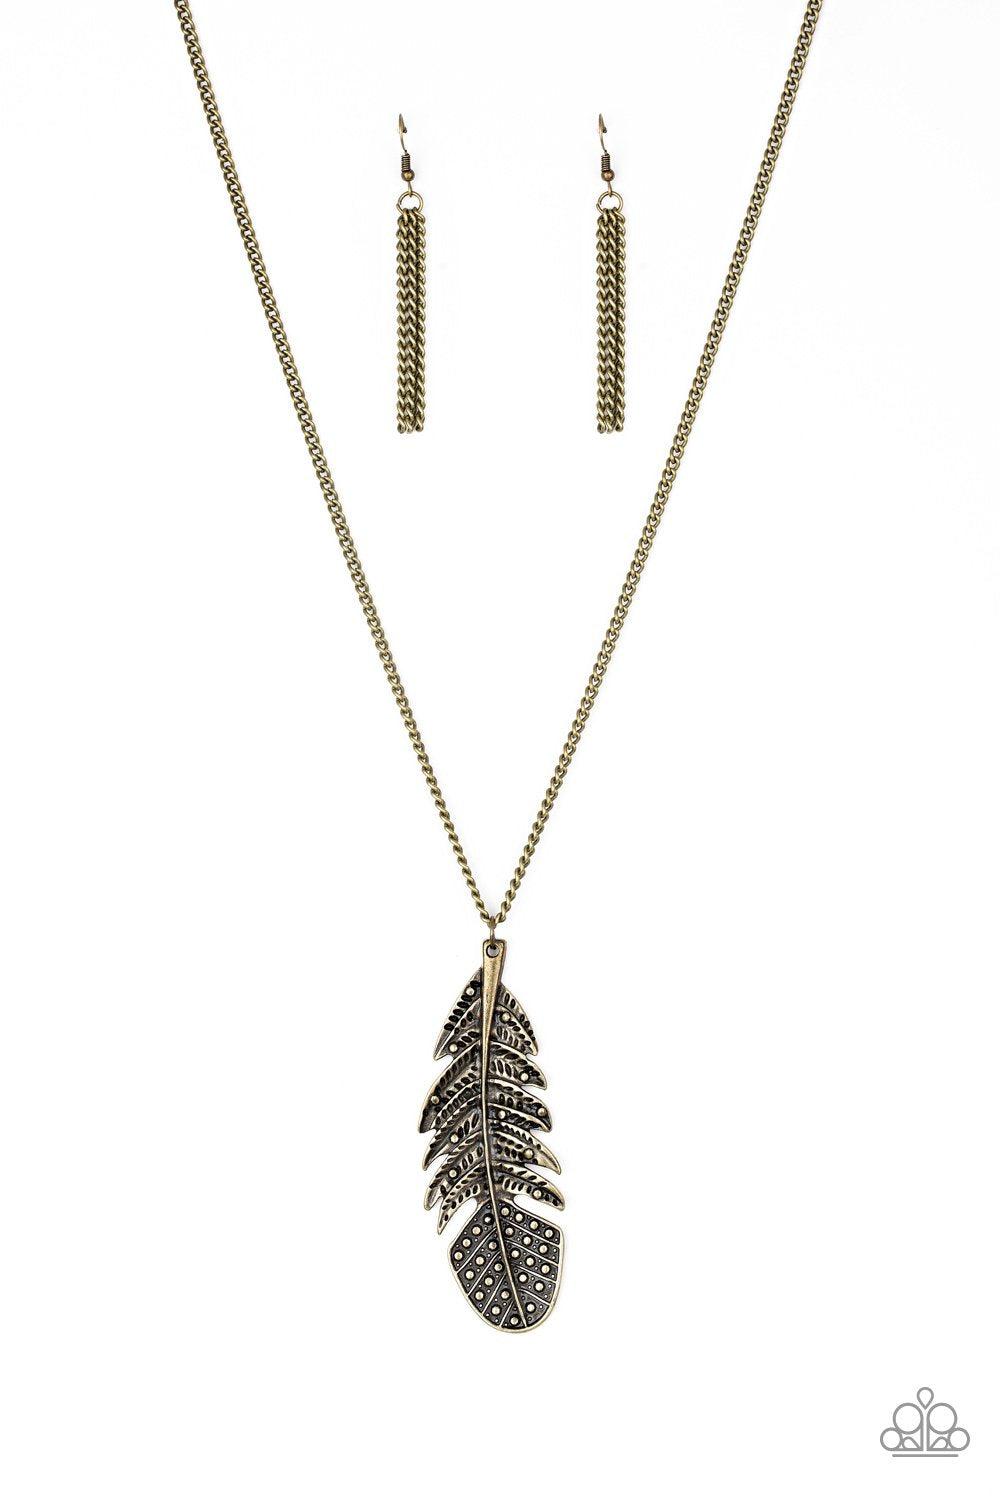 Free Bird Brass Feather Necklace - Paparazzi Accessories-CarasShop.com - $5 Jewelry by Cara Jewels